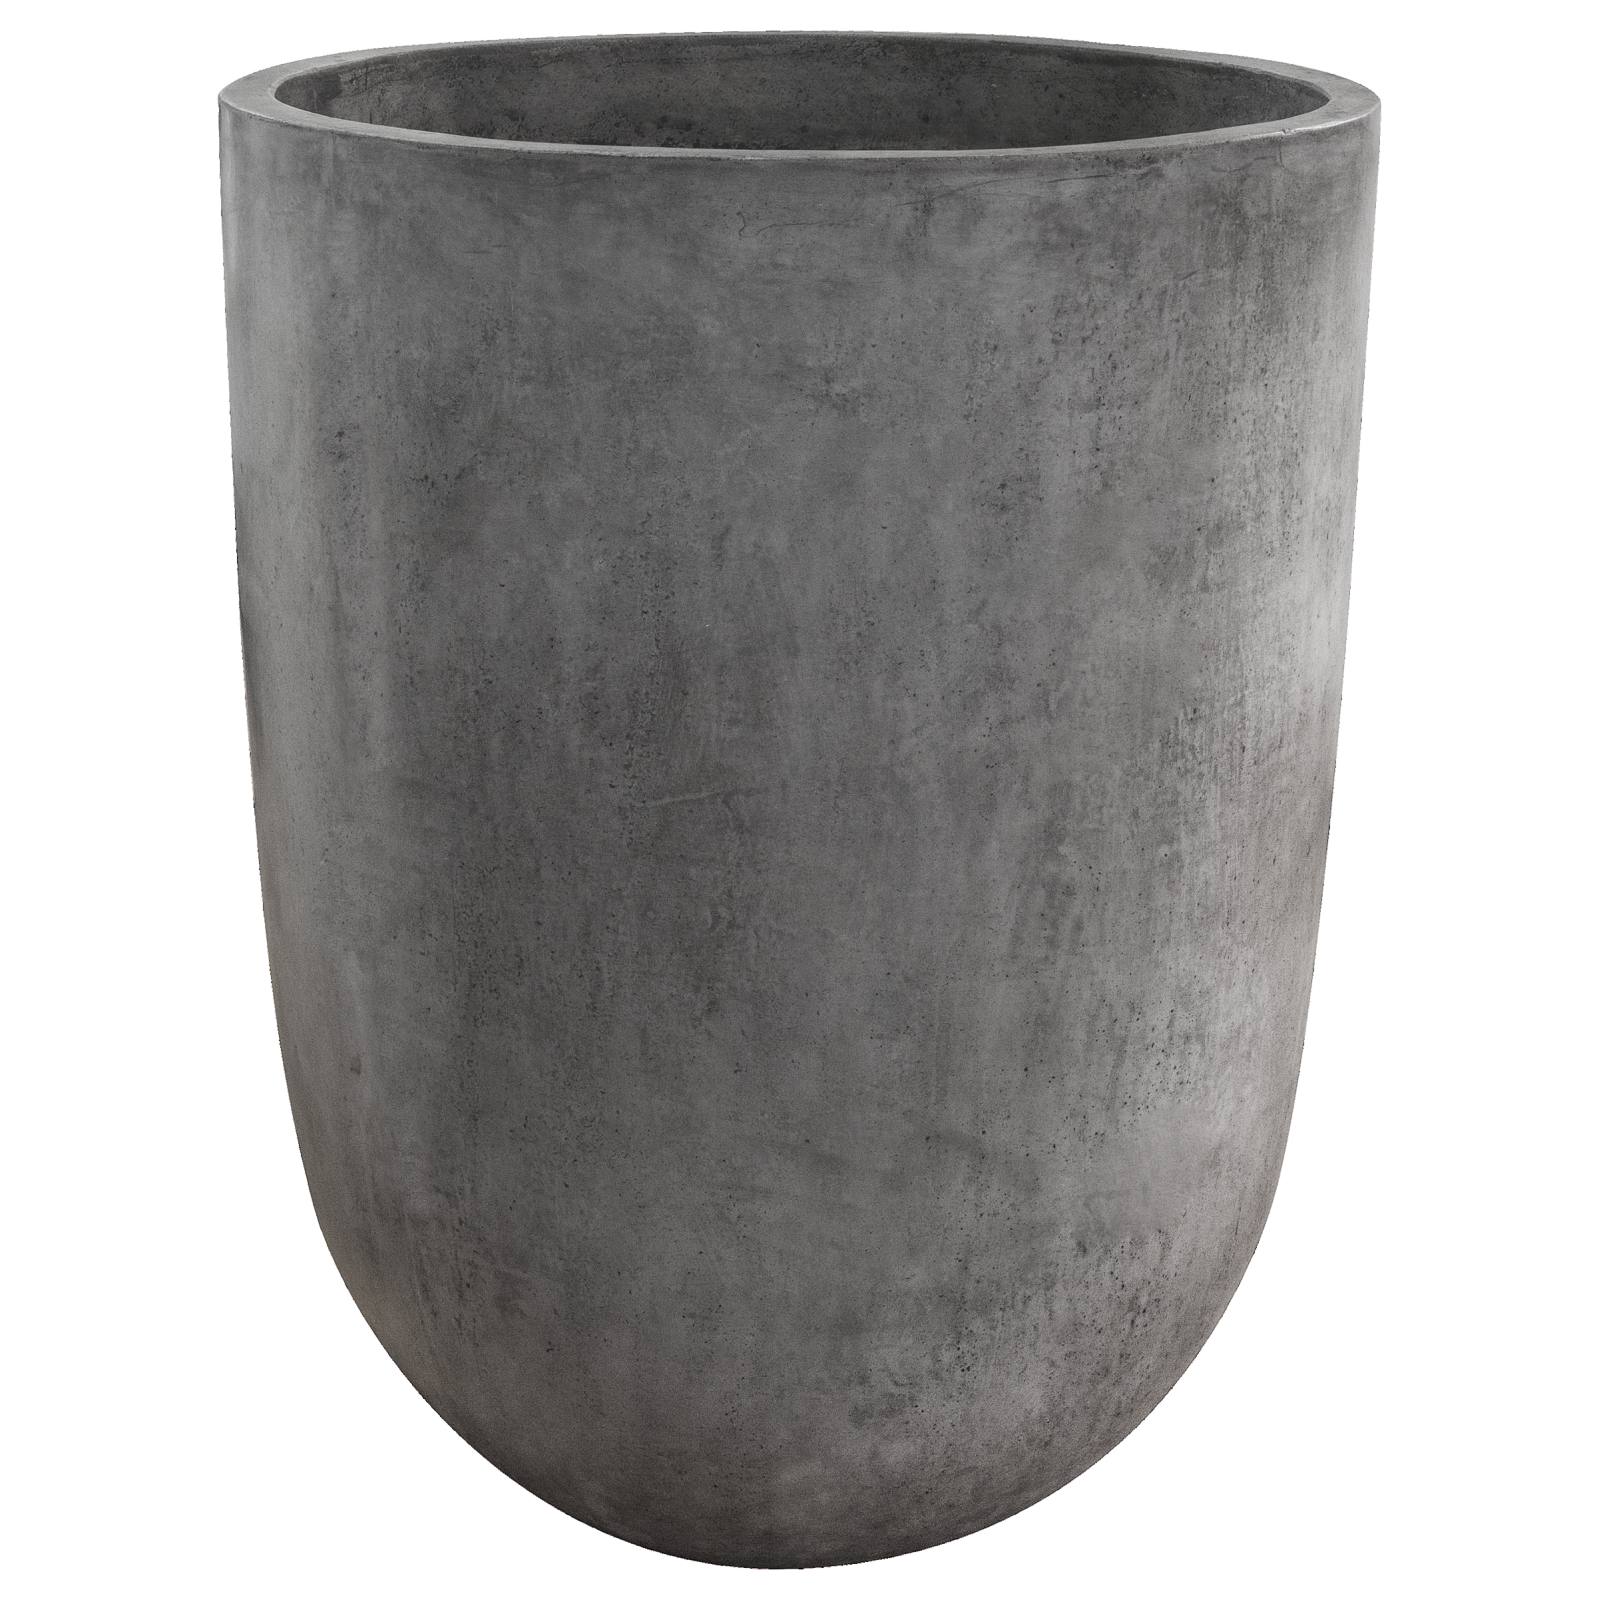 Bali Round 55x75cm Polished Concrete Planter, Dark Grey